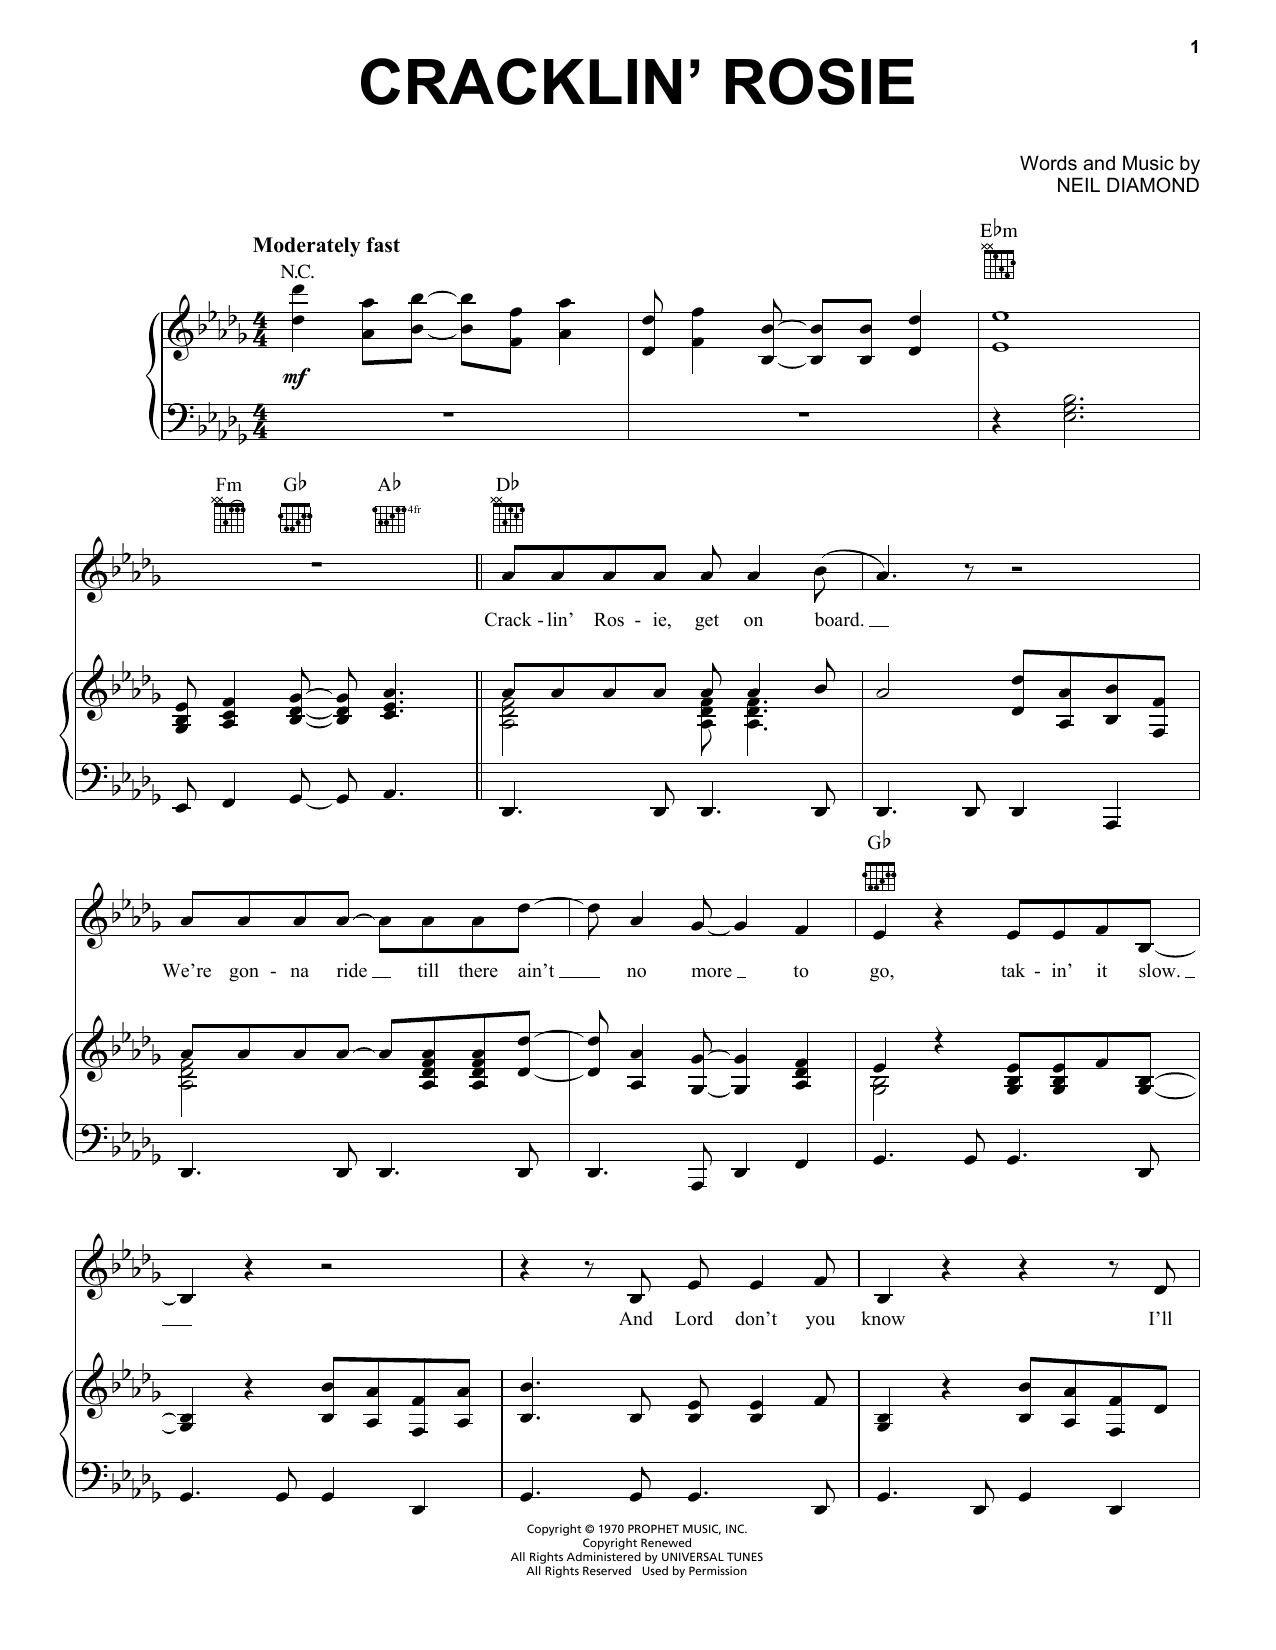 Neil Diamond Cracklin' Rosie Sheet Music Notes & Chords for Ukulele - Download or Print PDF